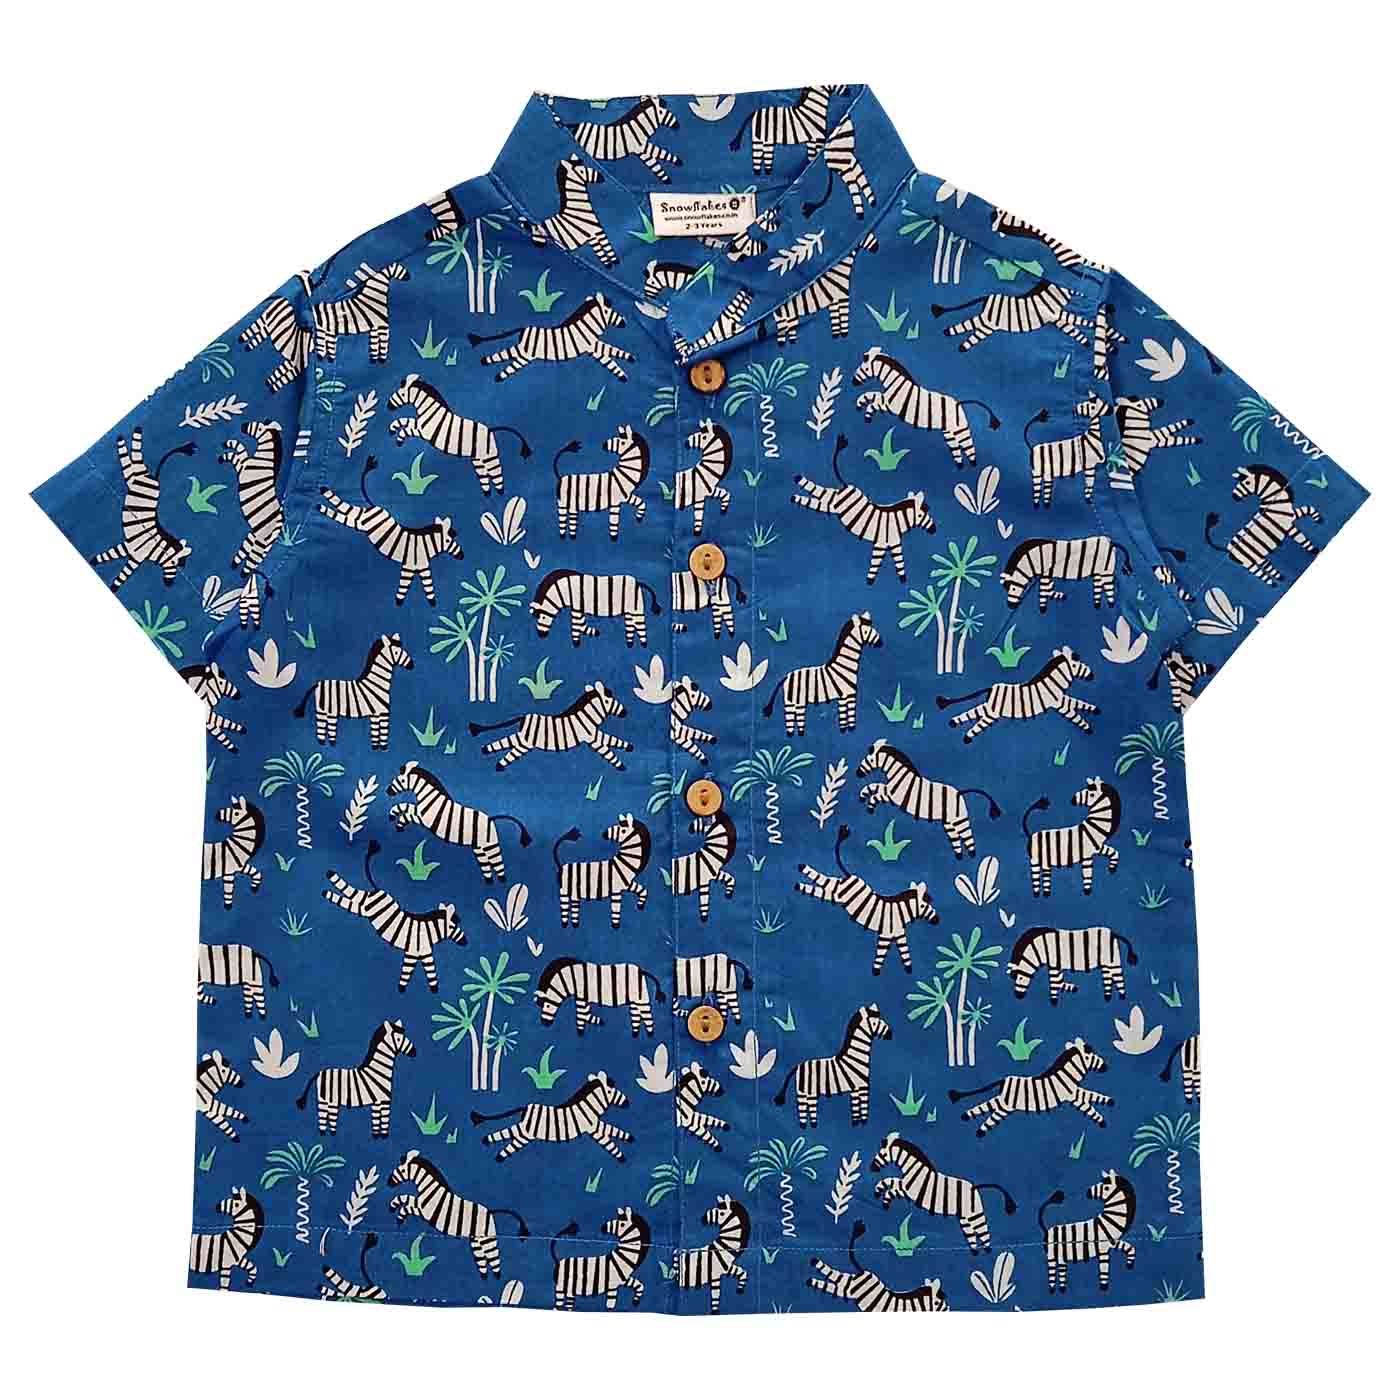 Snowflakes Boys Half Sleeve Shirt With Zebra Prints - Blue